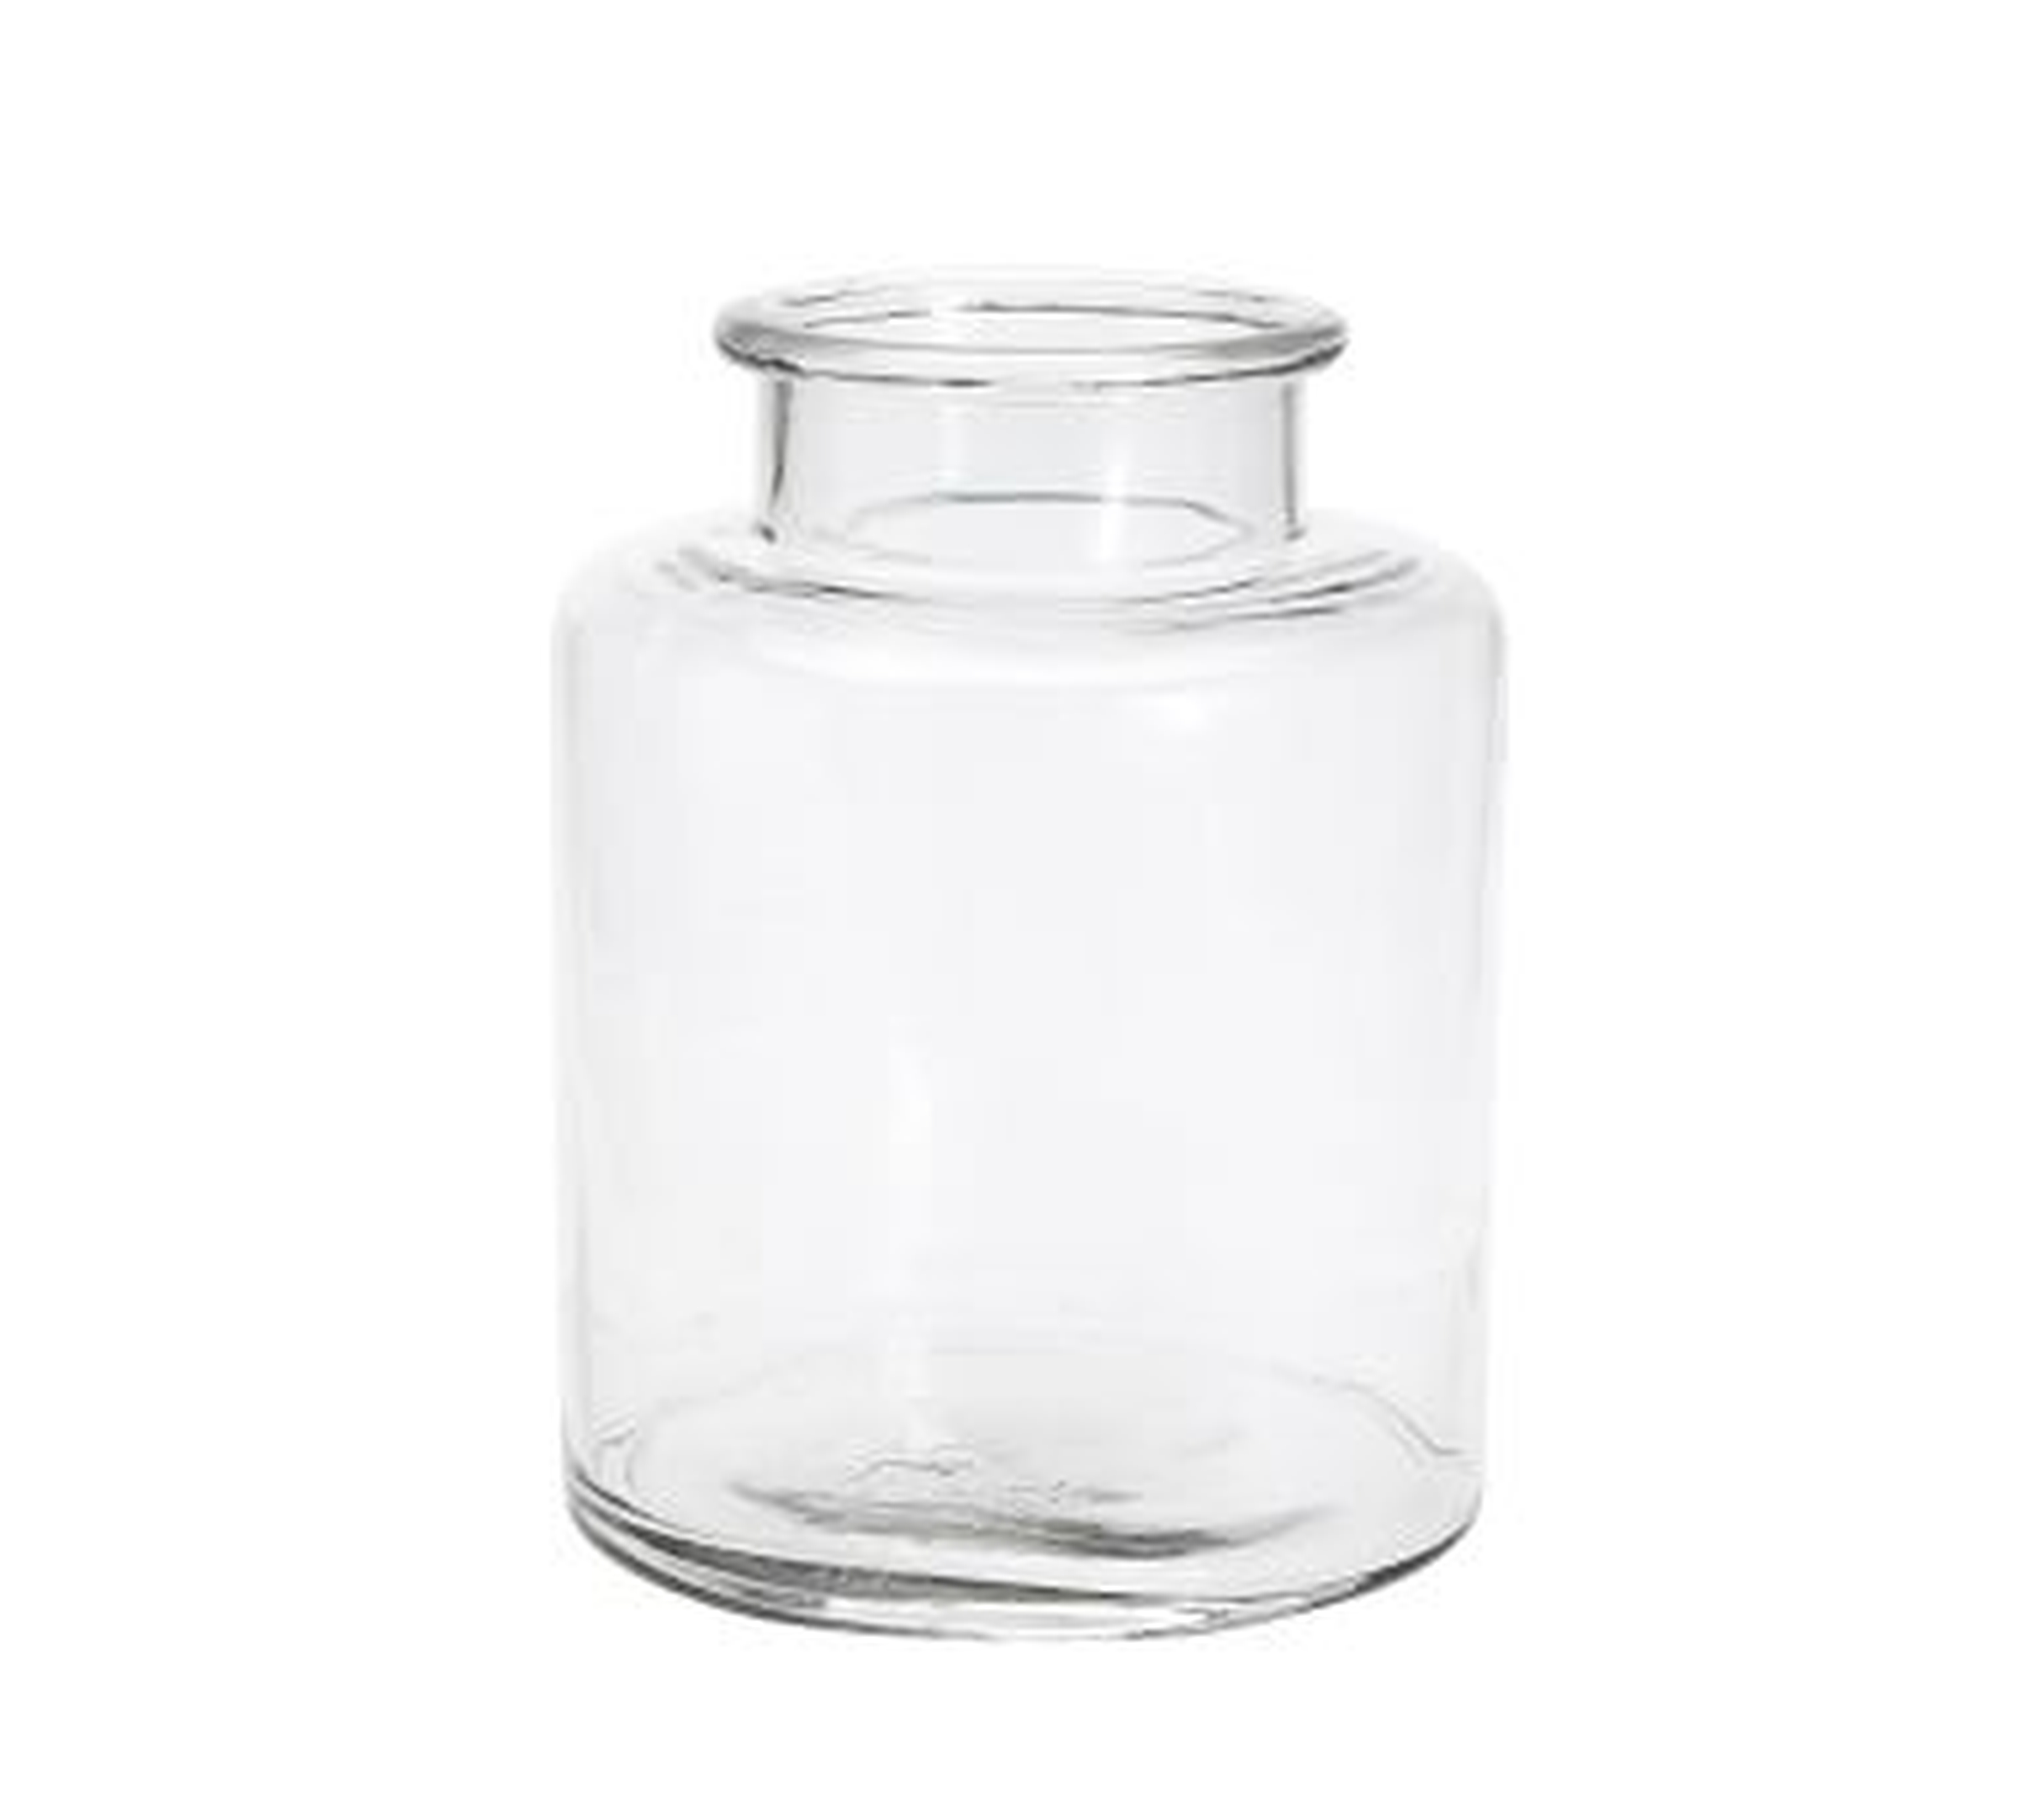 Shouldered Clear Glass Vase, Large - Pottery Barn